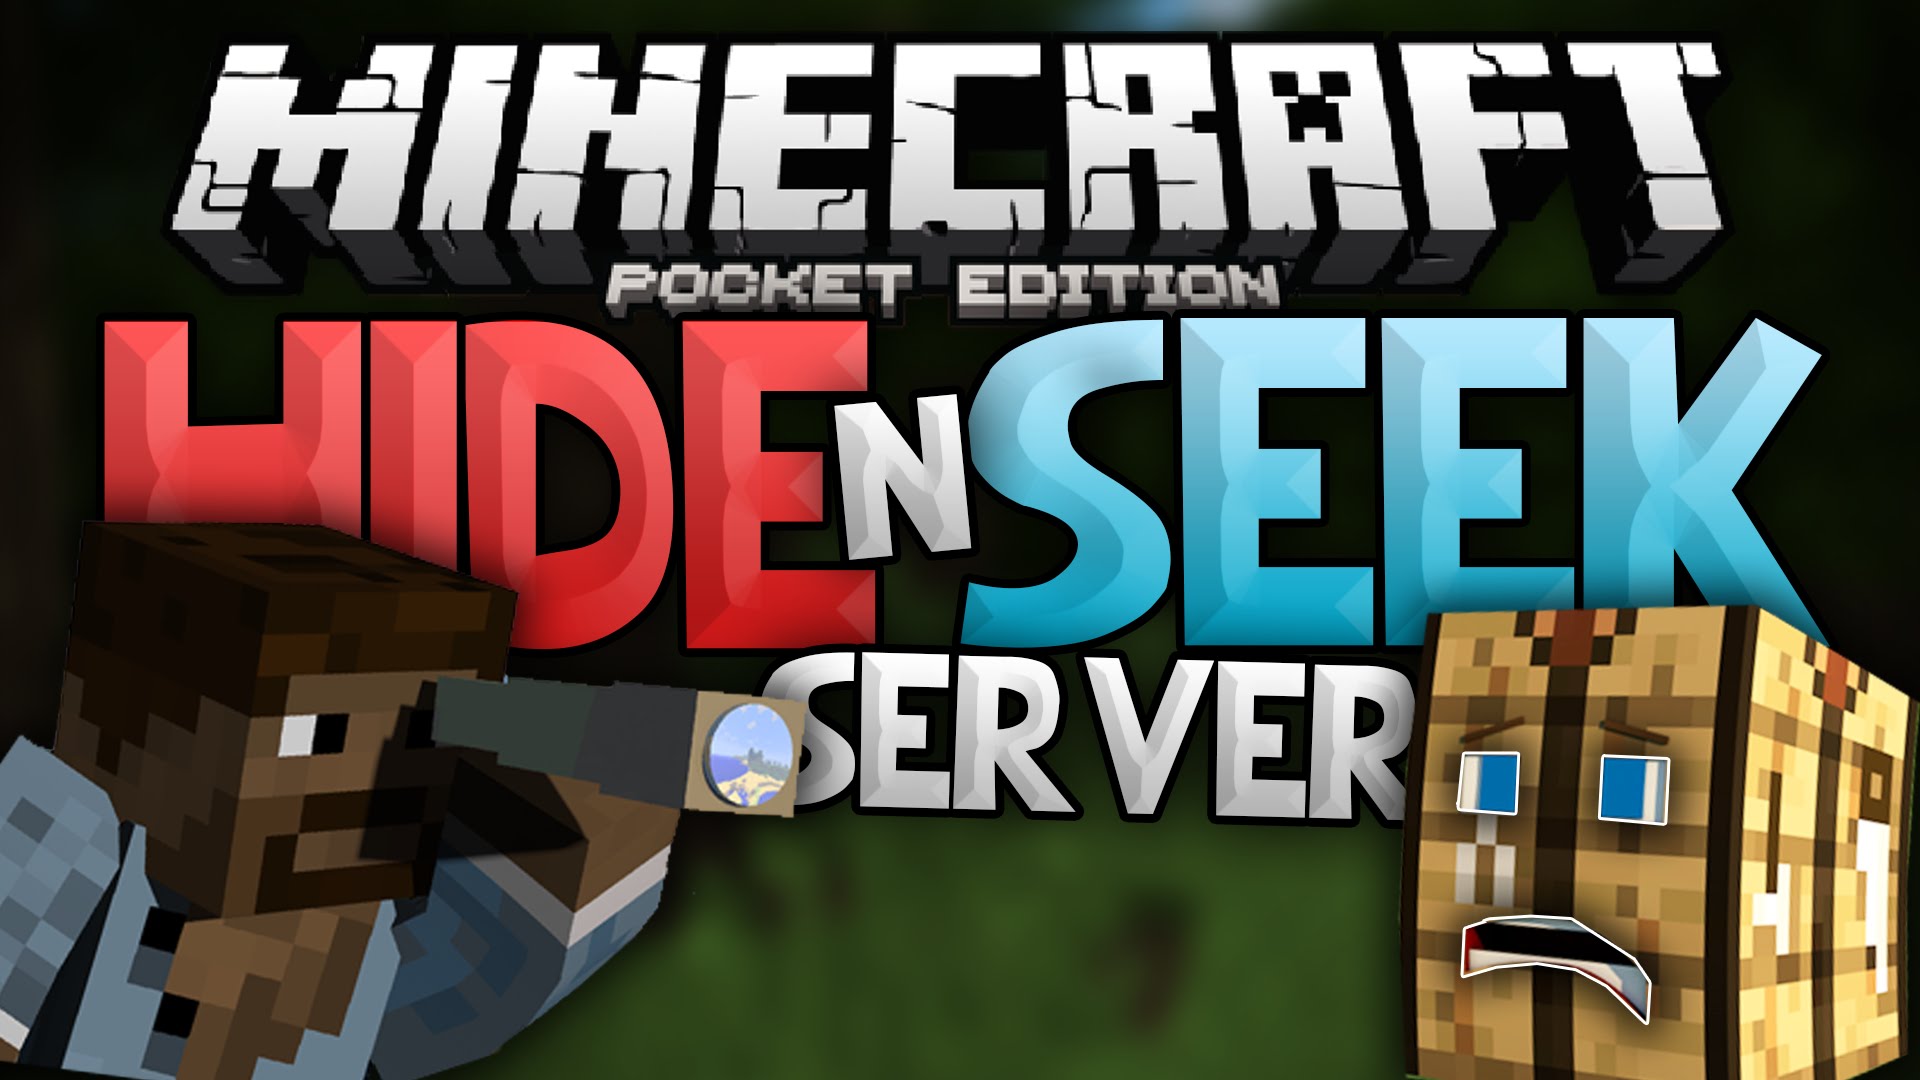 hiide and seek minecraft server